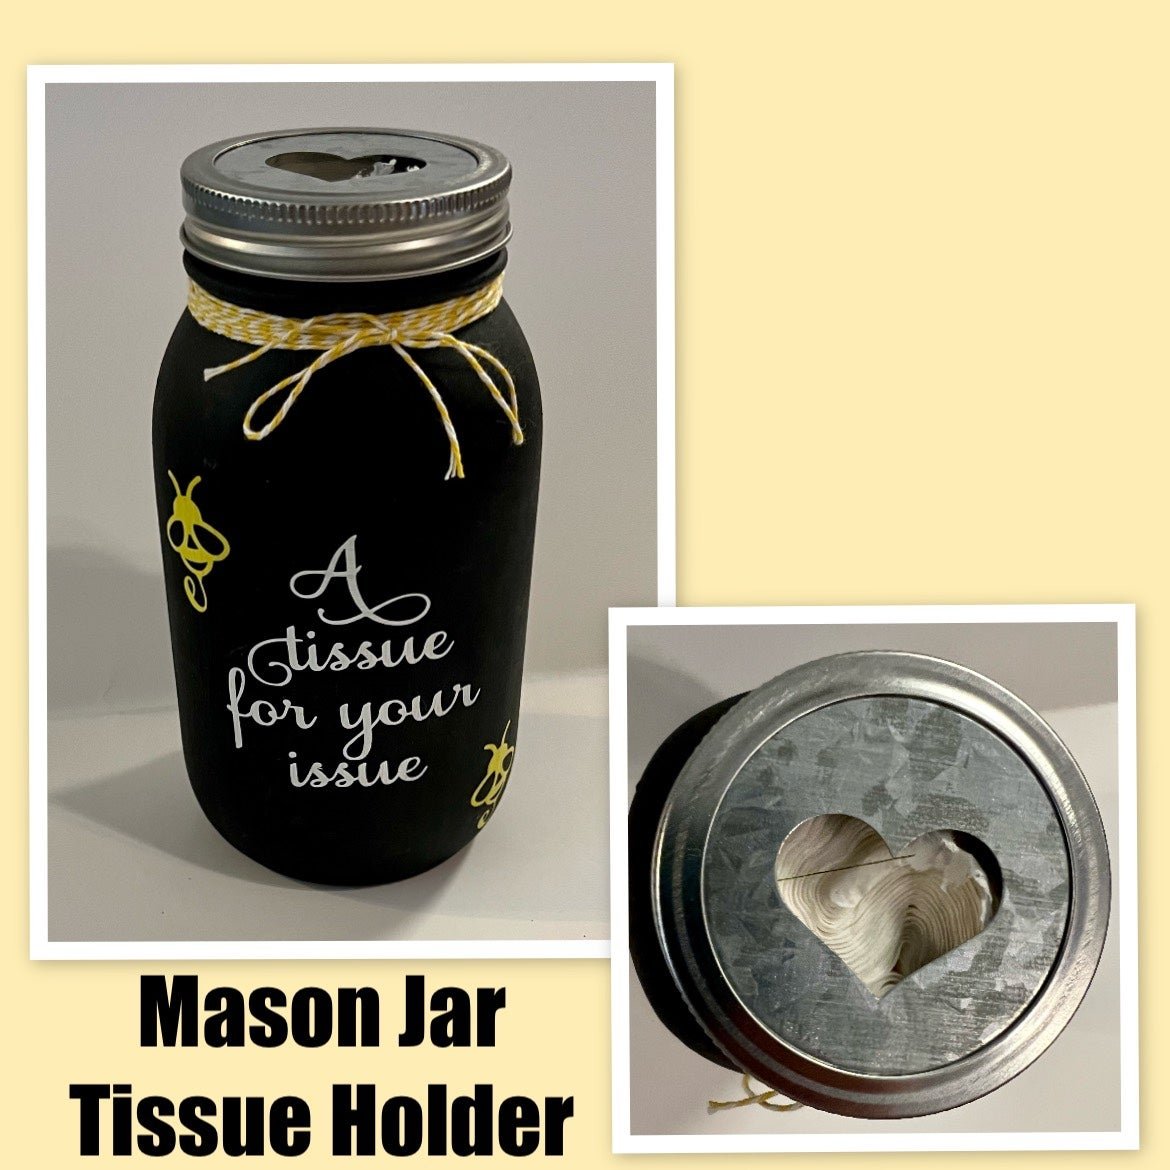 Mason Jar Tissue Holder jOtz4qGH9